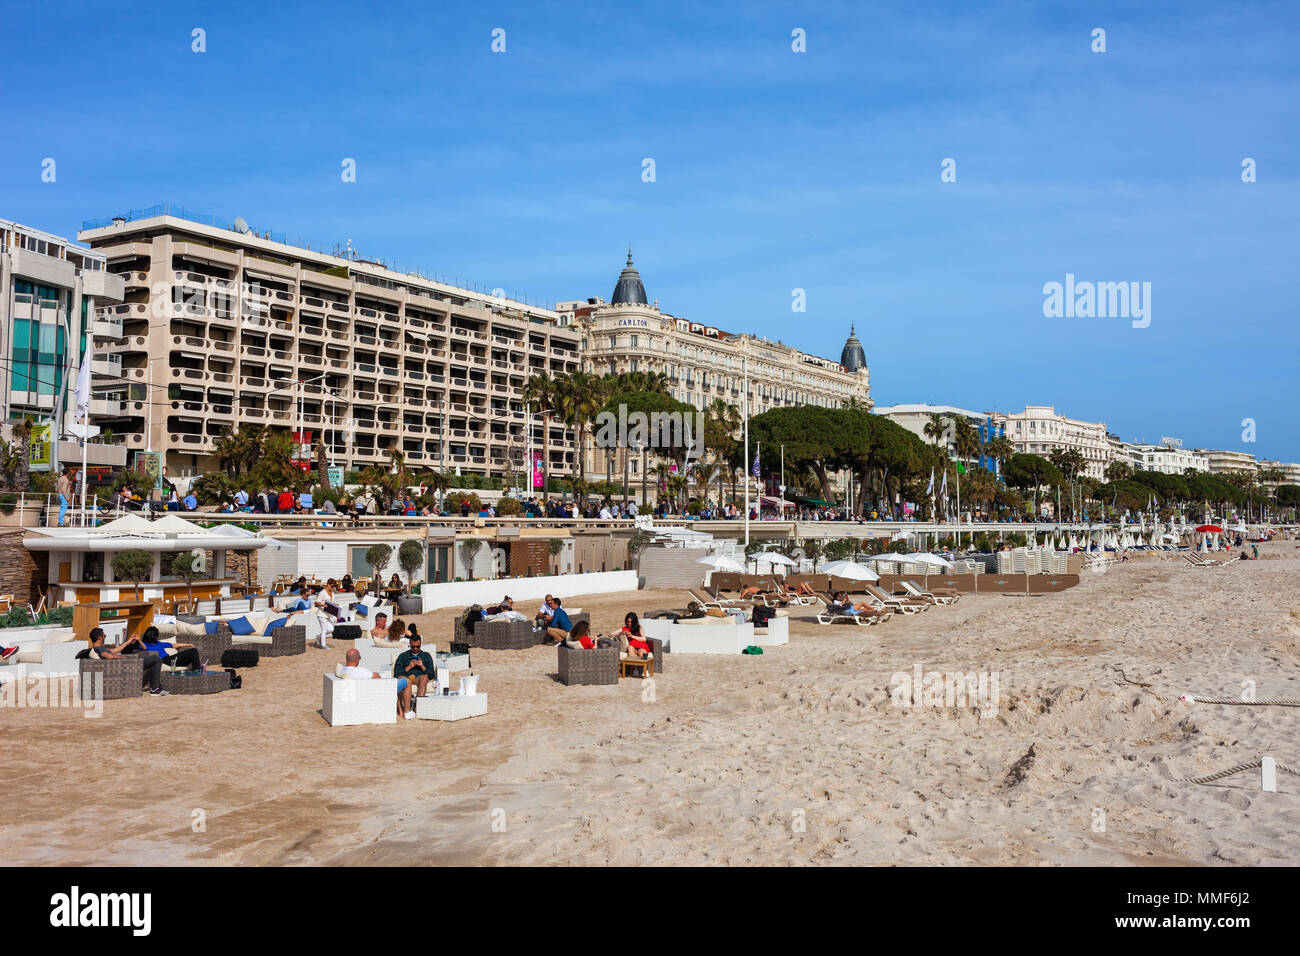 France, Cannes city, beach with sun loungers on French Riviera, buildings along Boulevard de la Croisette Stock Photo